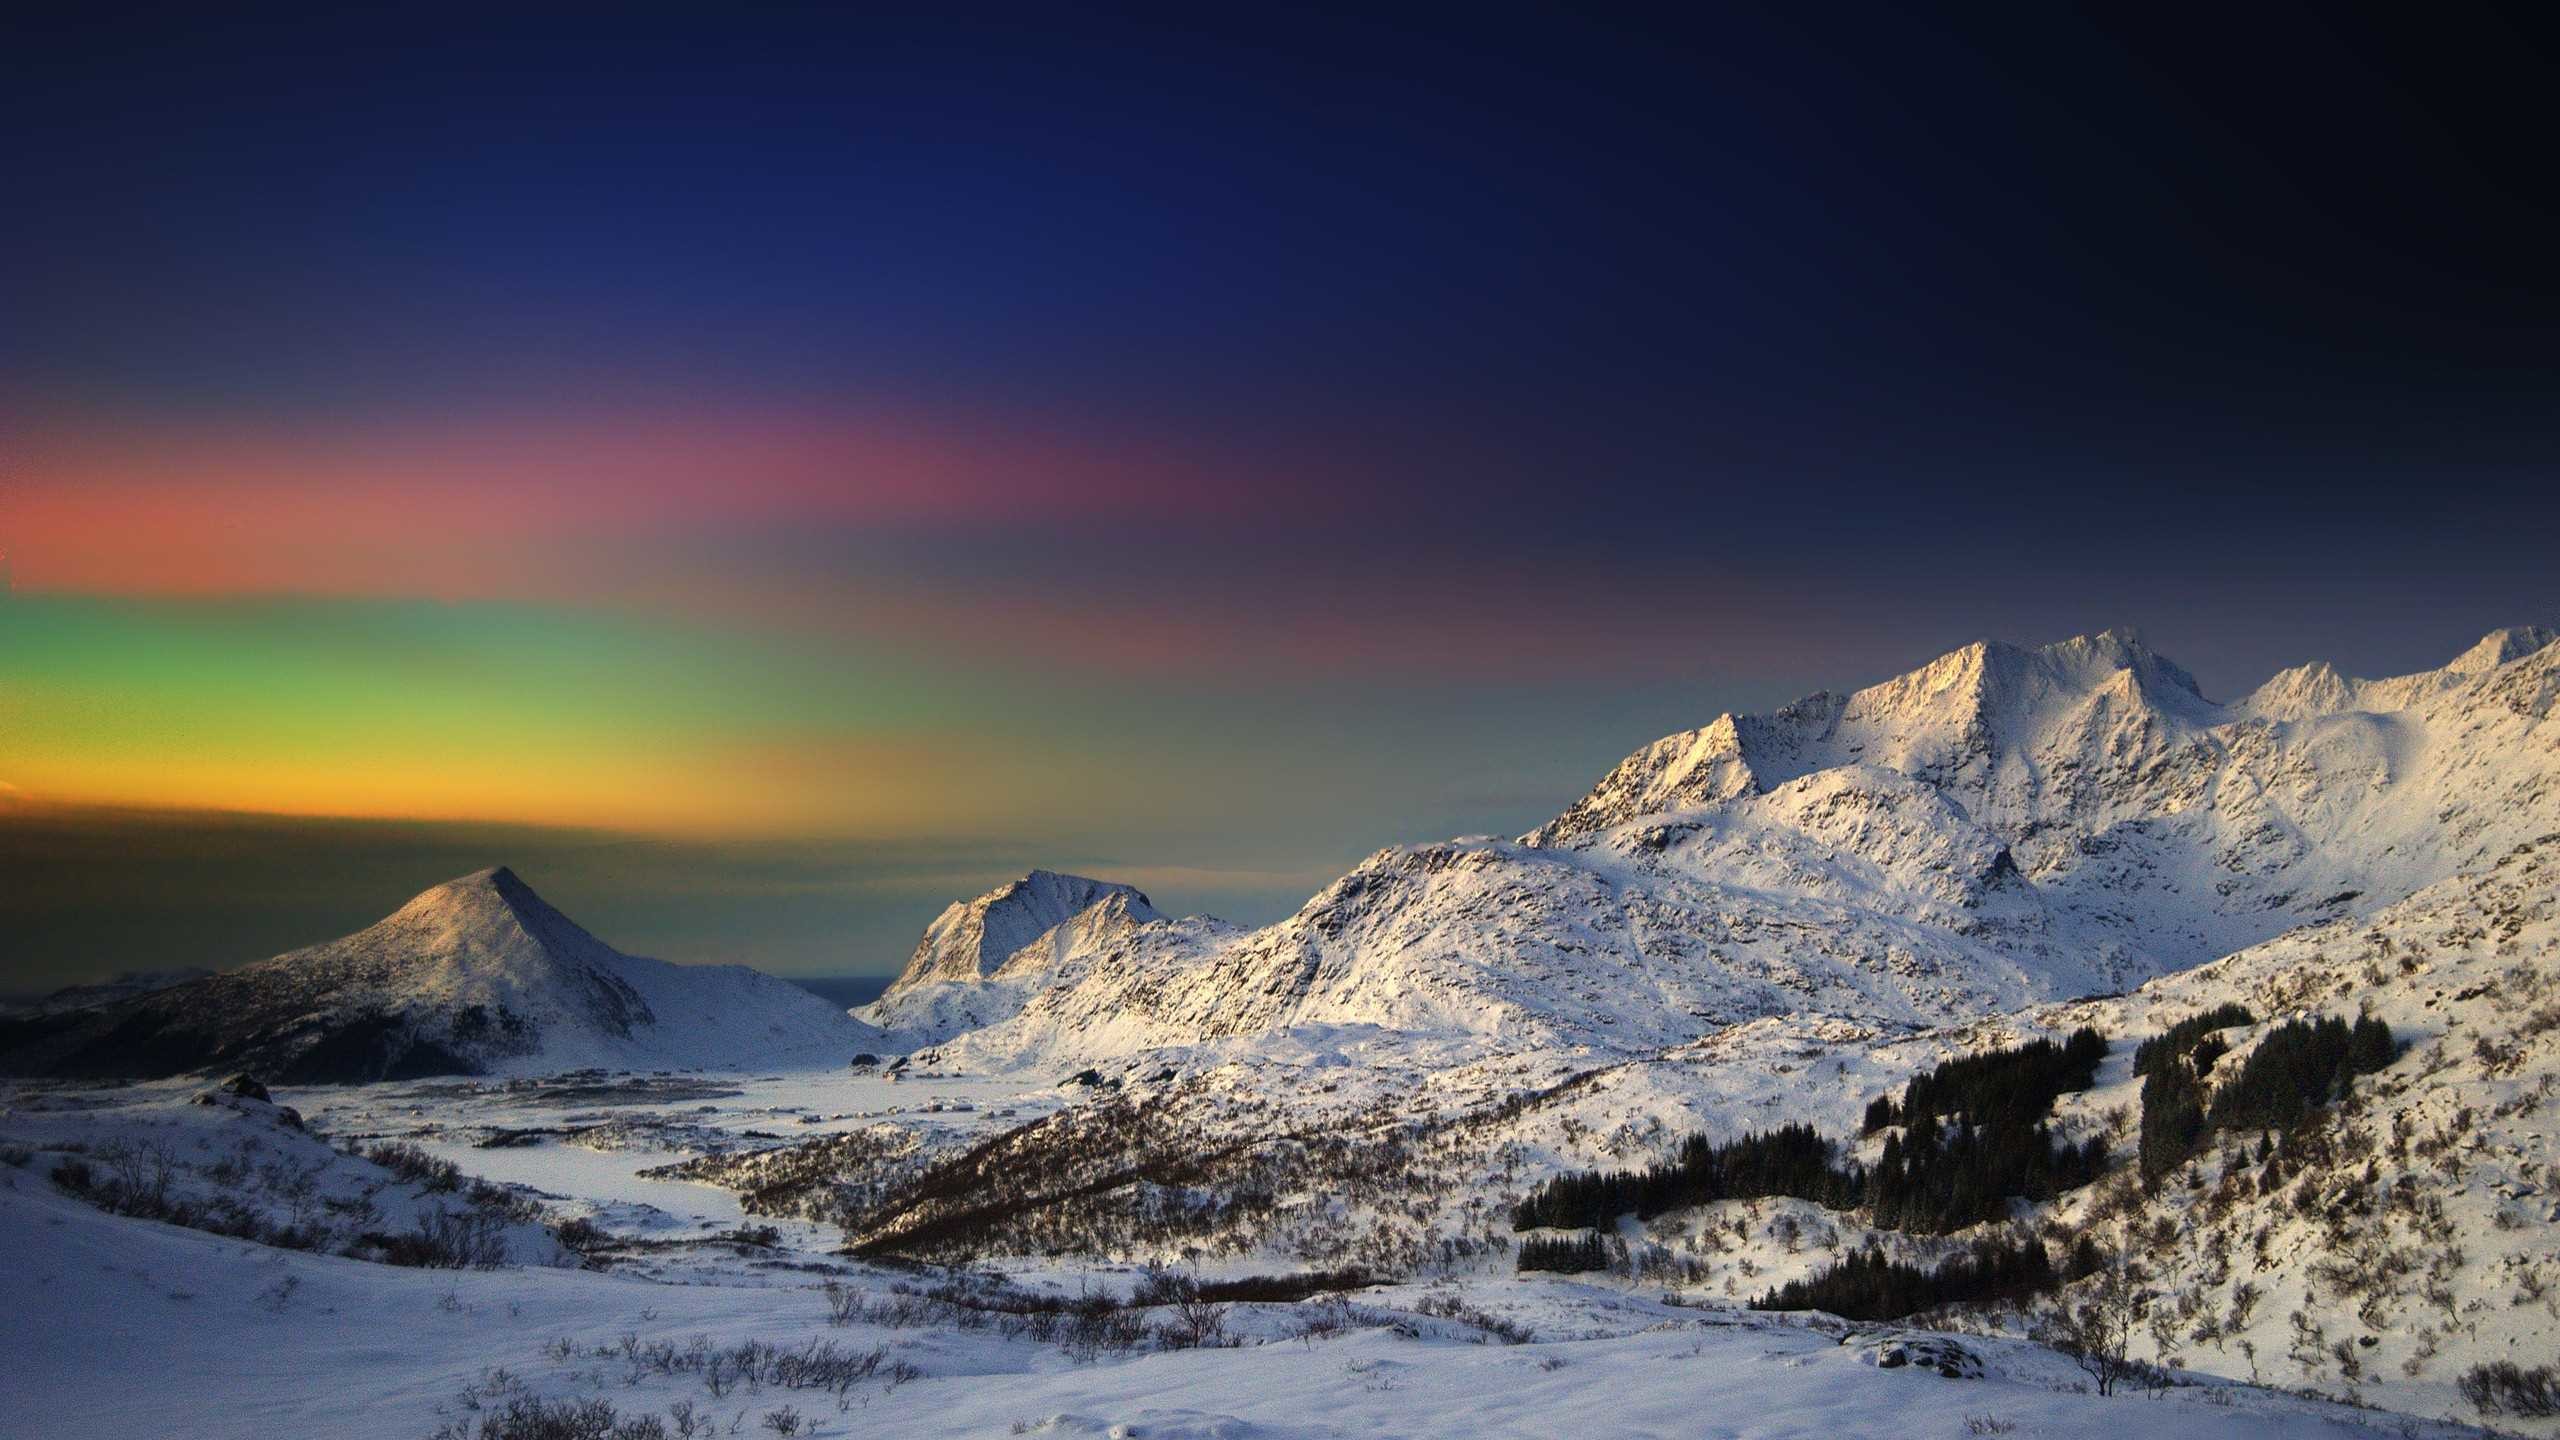 2560x1440 wallpaper.wiki-Snowy-Mountains-Desktop-Backgrounds-PIC-WPE001038